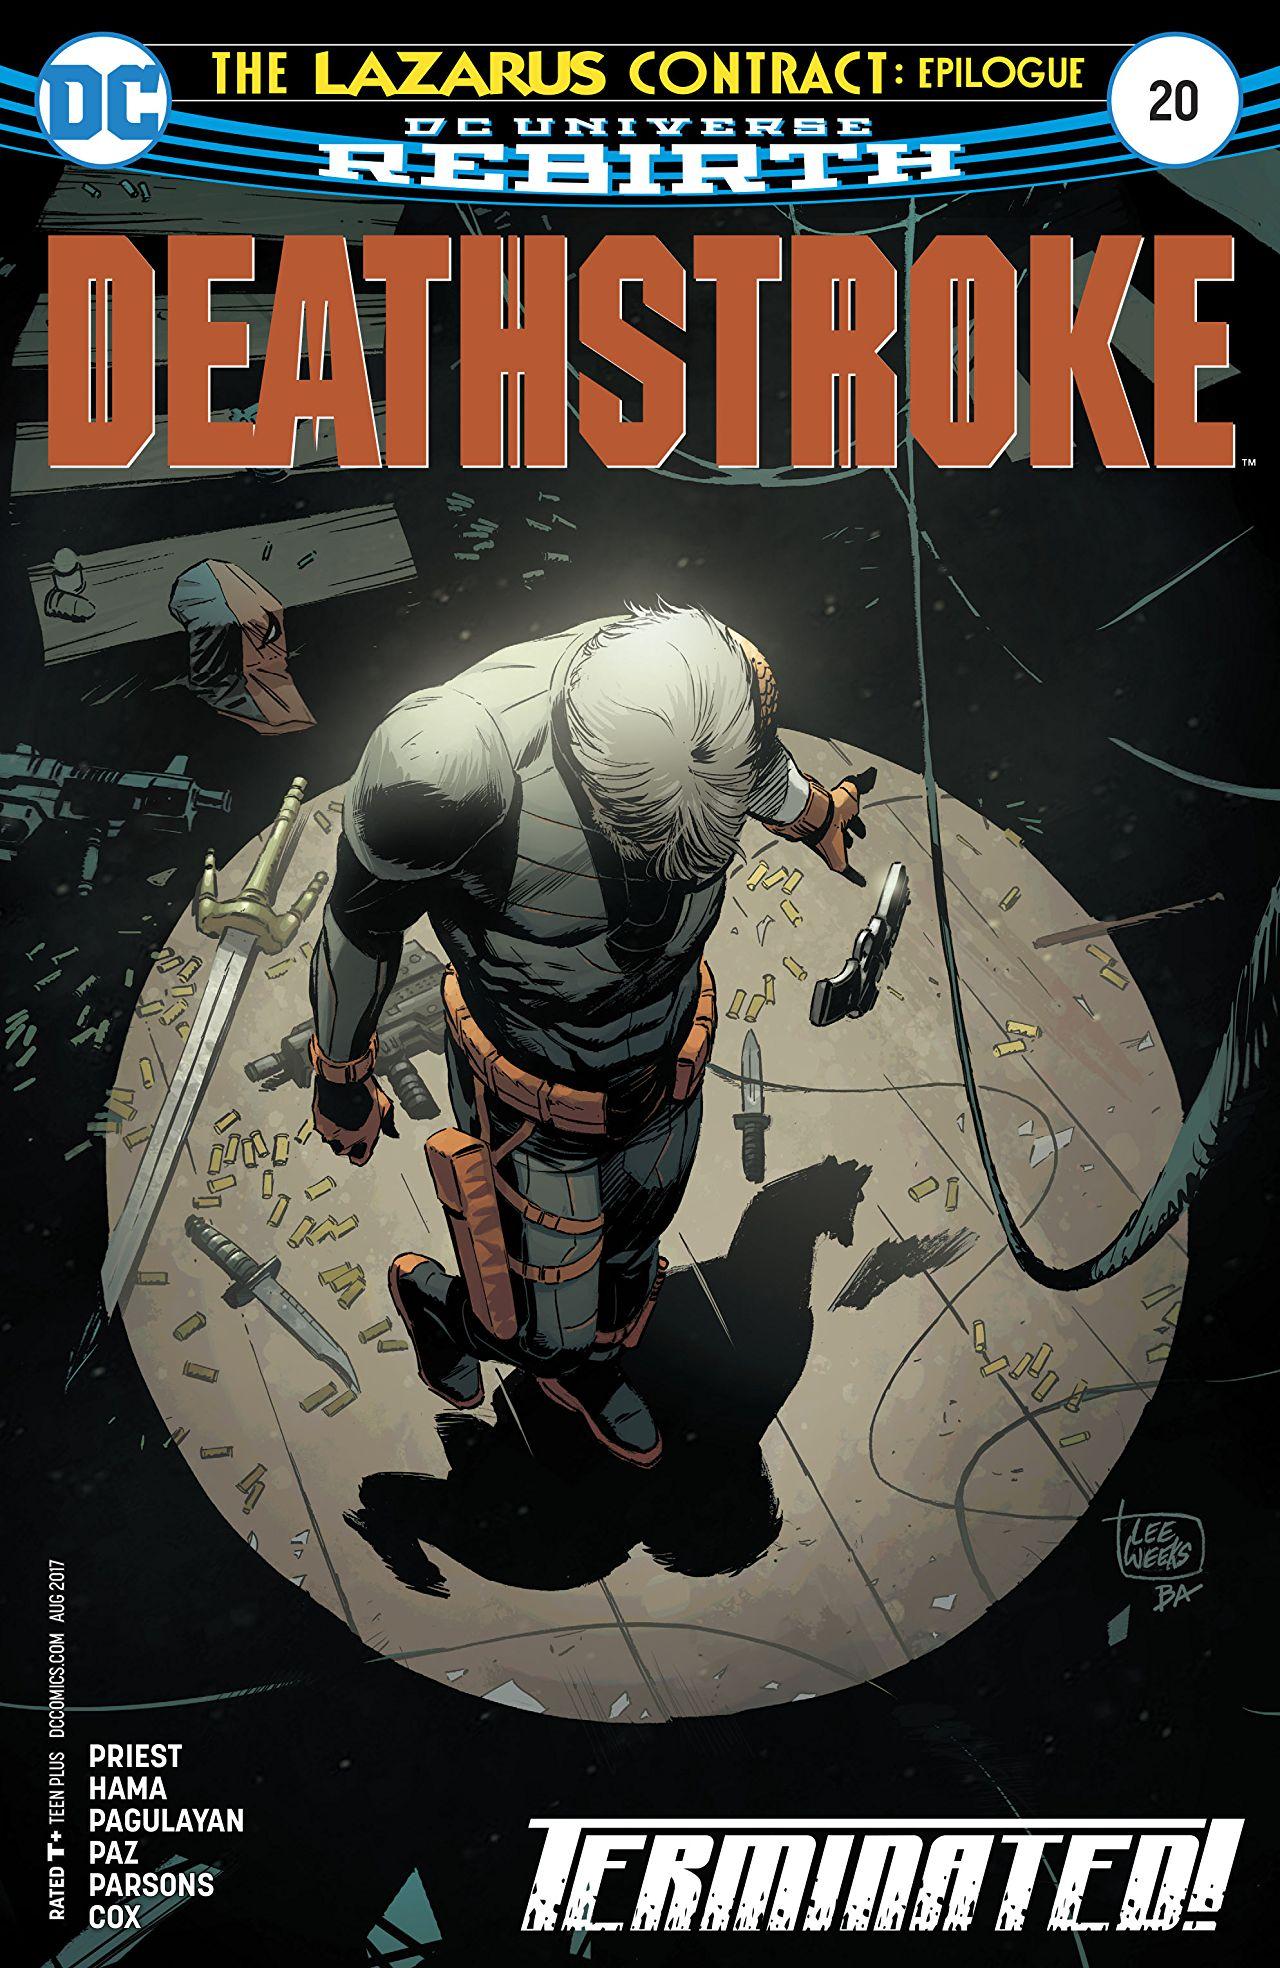 Deathstroke Vol. 4 #20